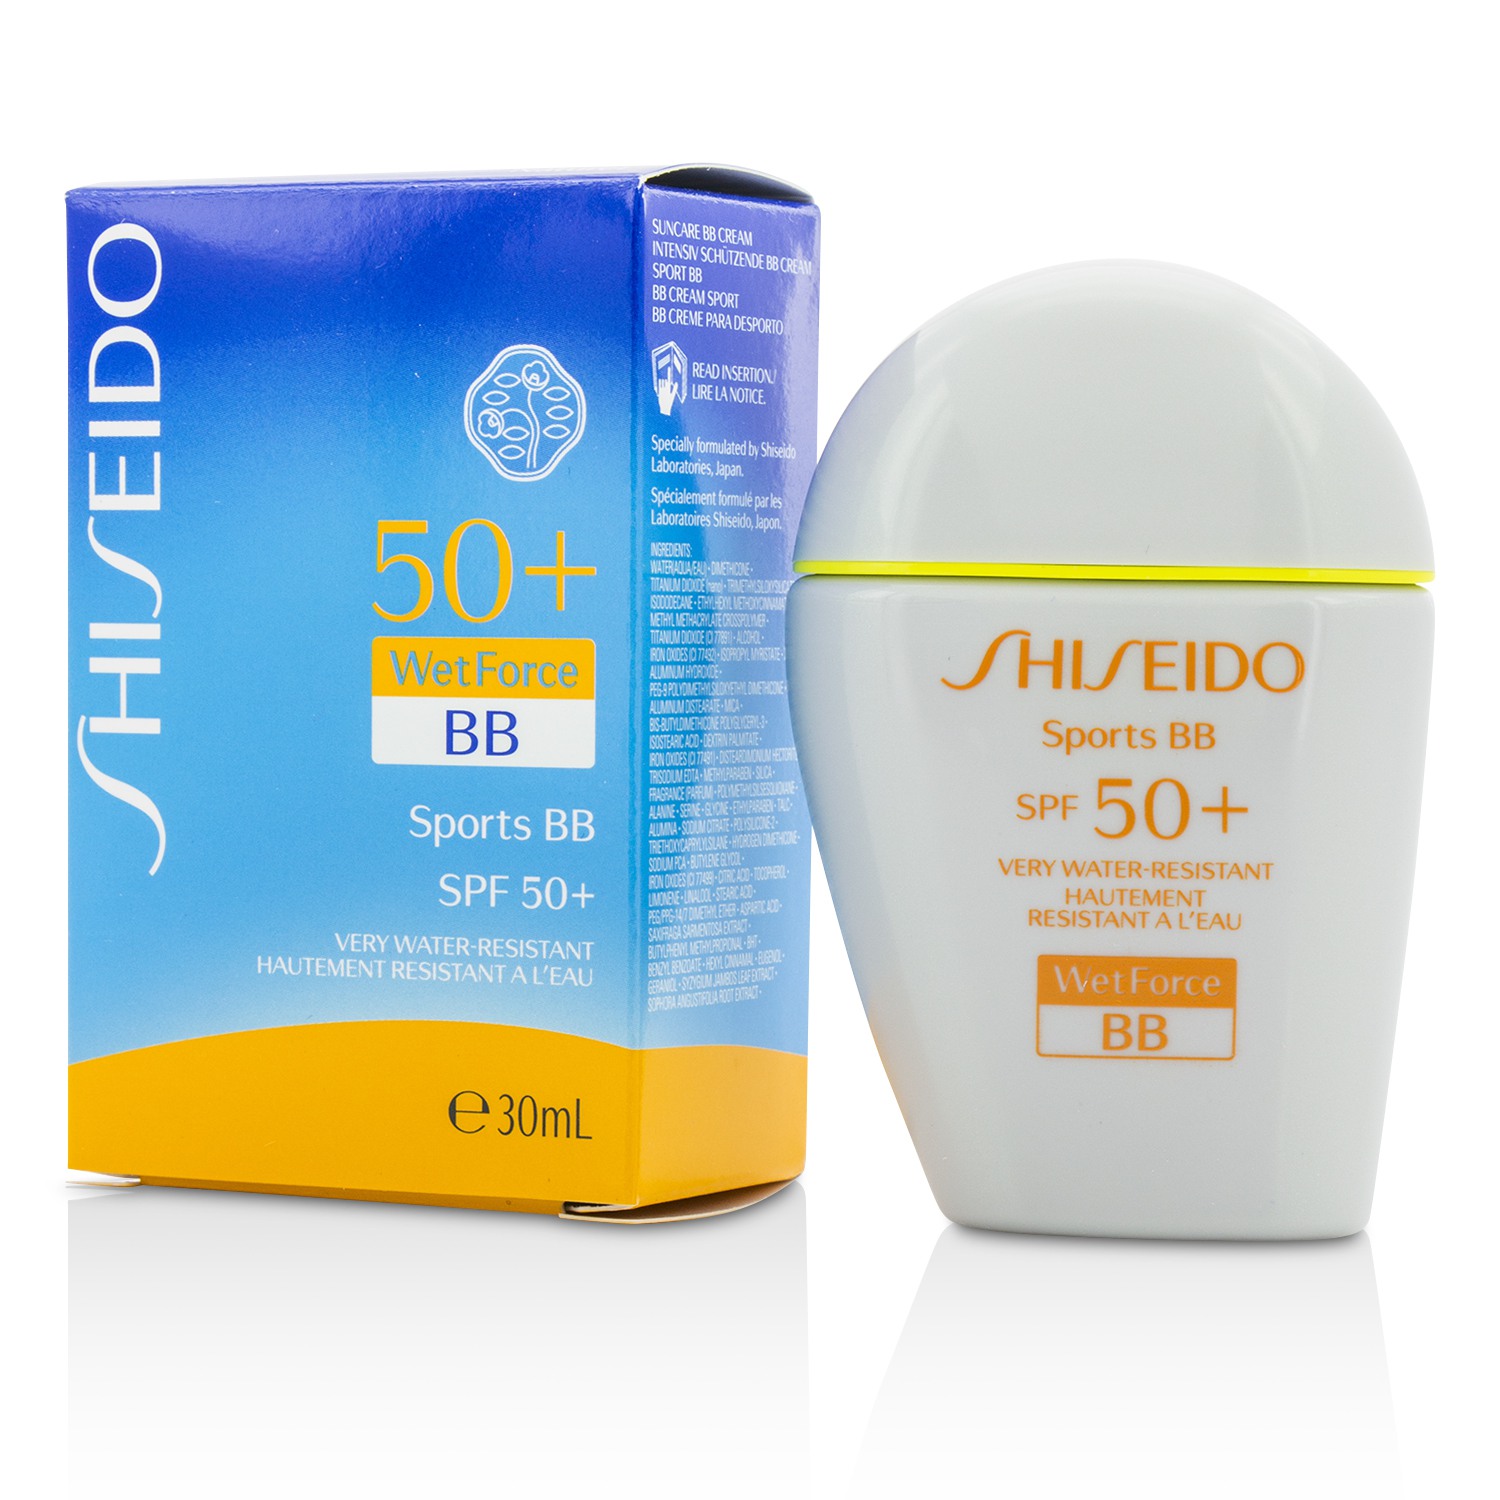 Sports BB SPF 50+ Very Water-Resistant - # Light Shiseido Image